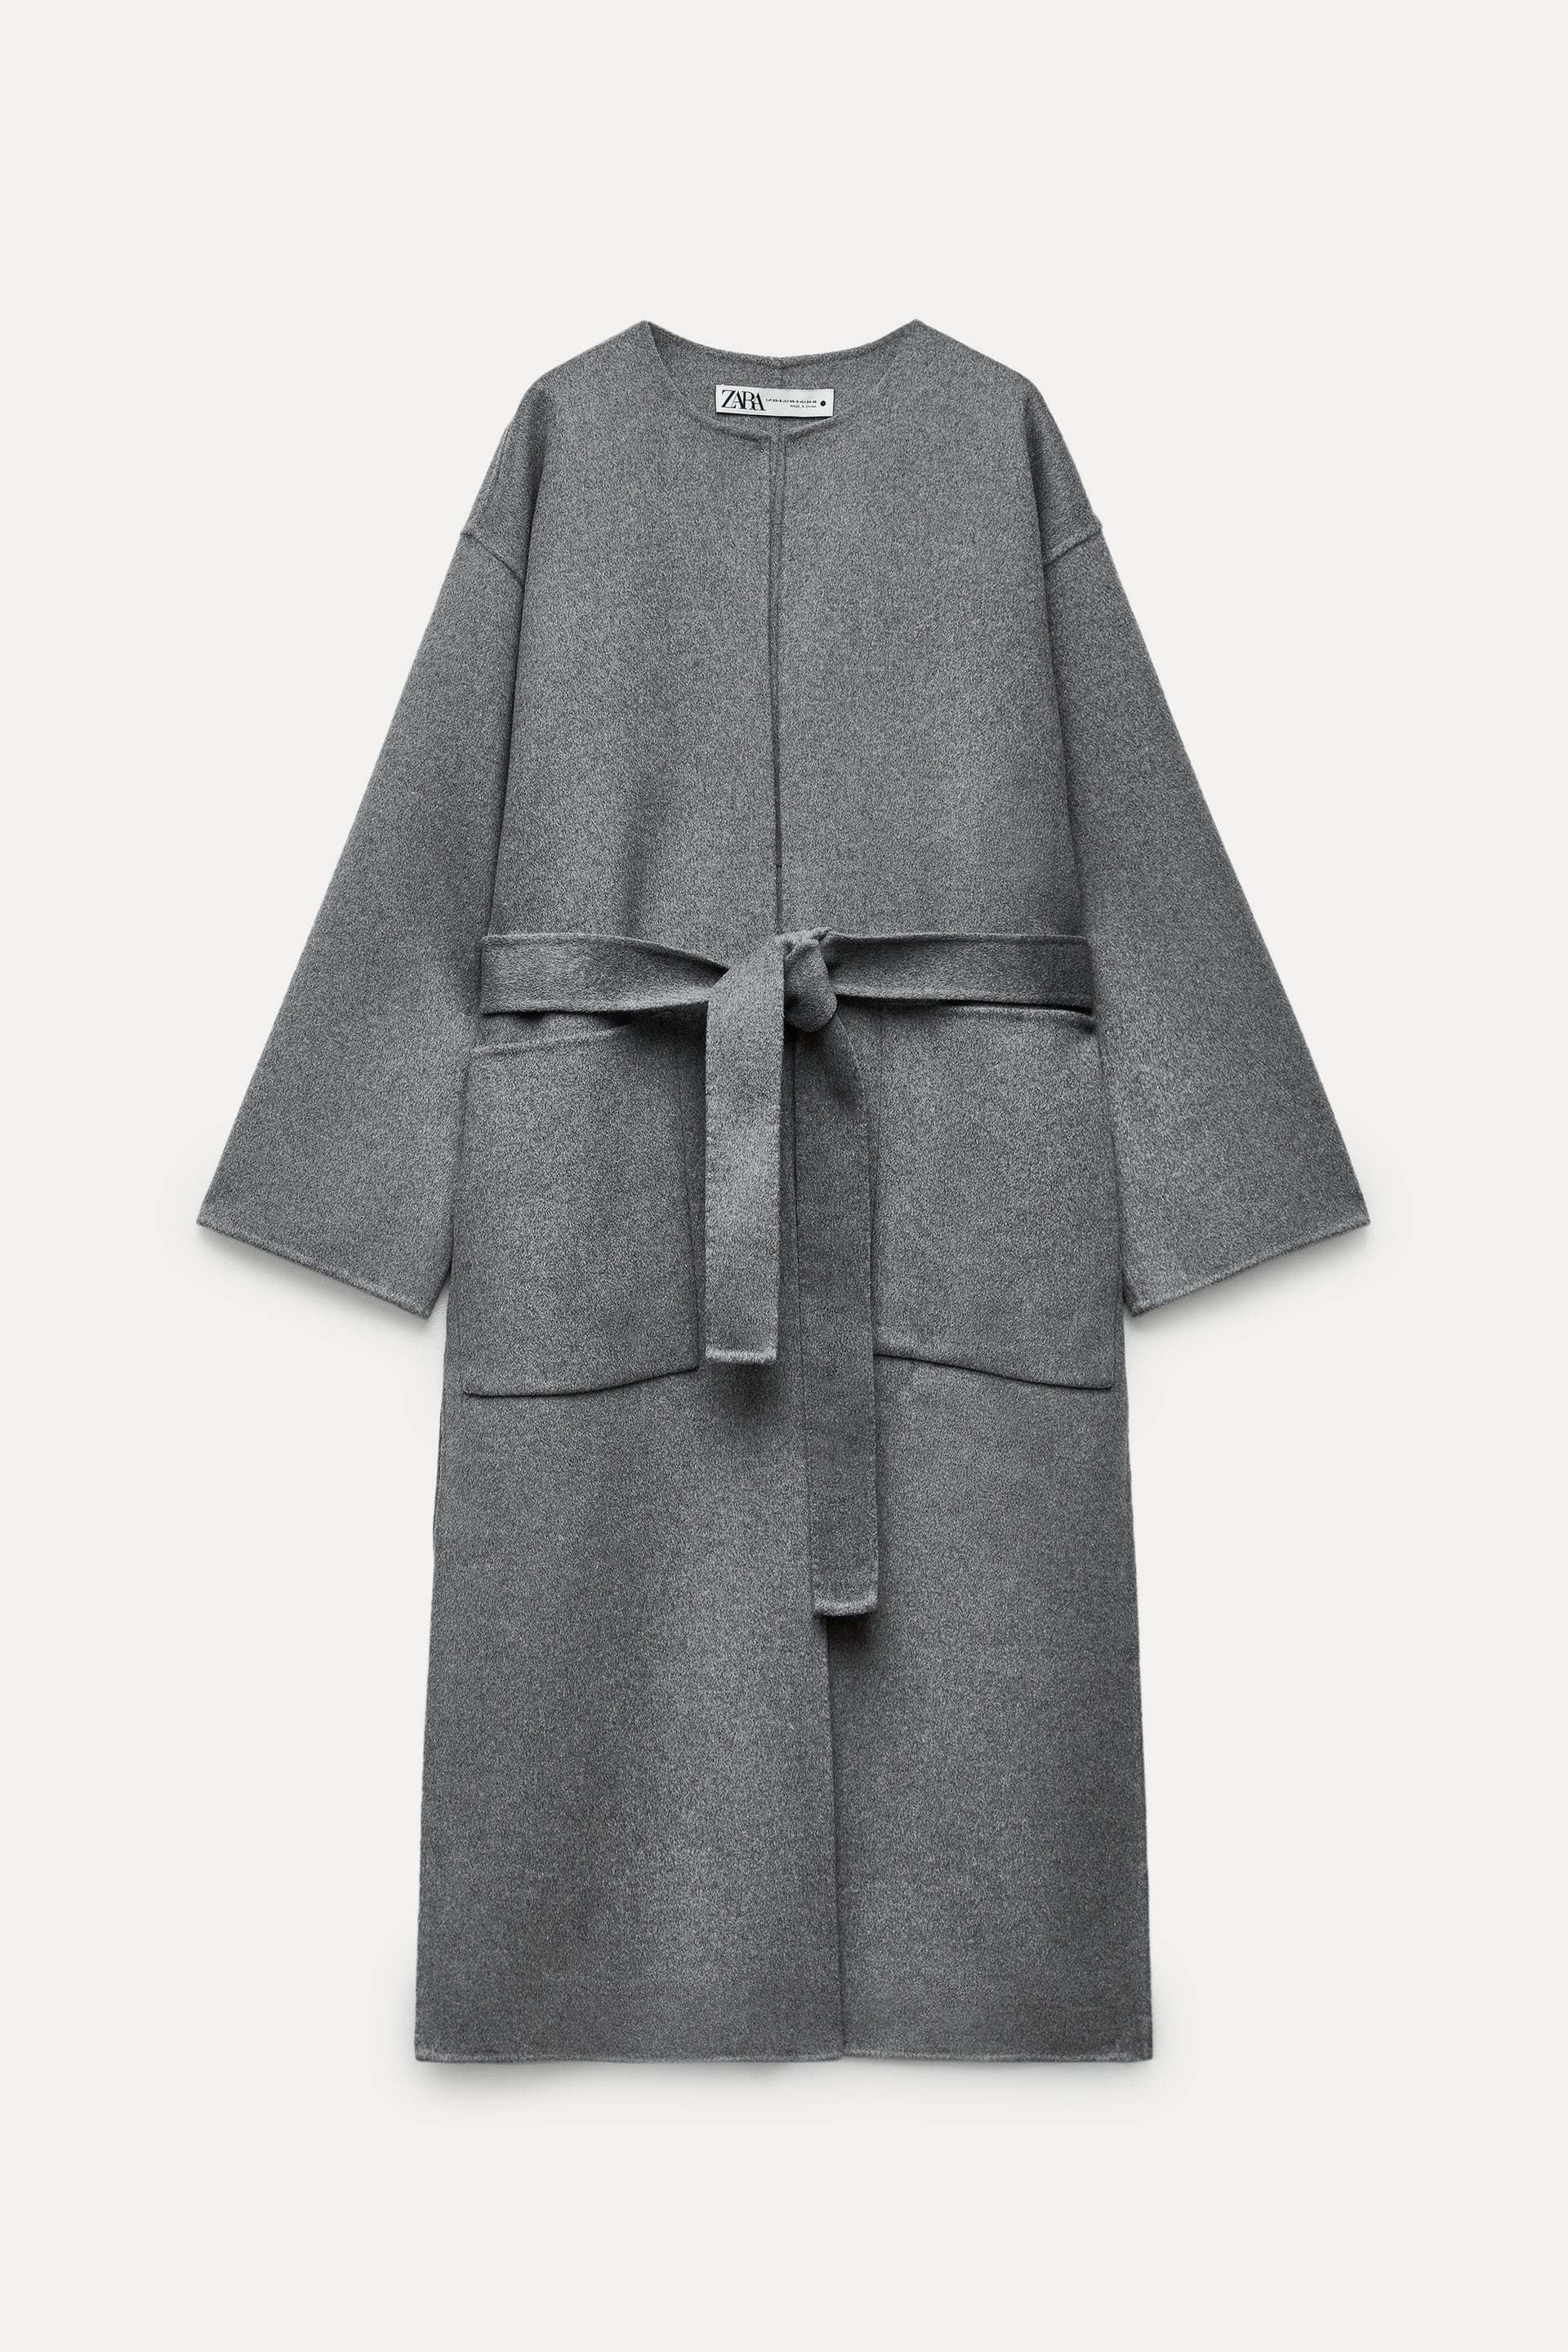 Abrigo gris con cinturón y cuello redondo de Zara (169 euros).